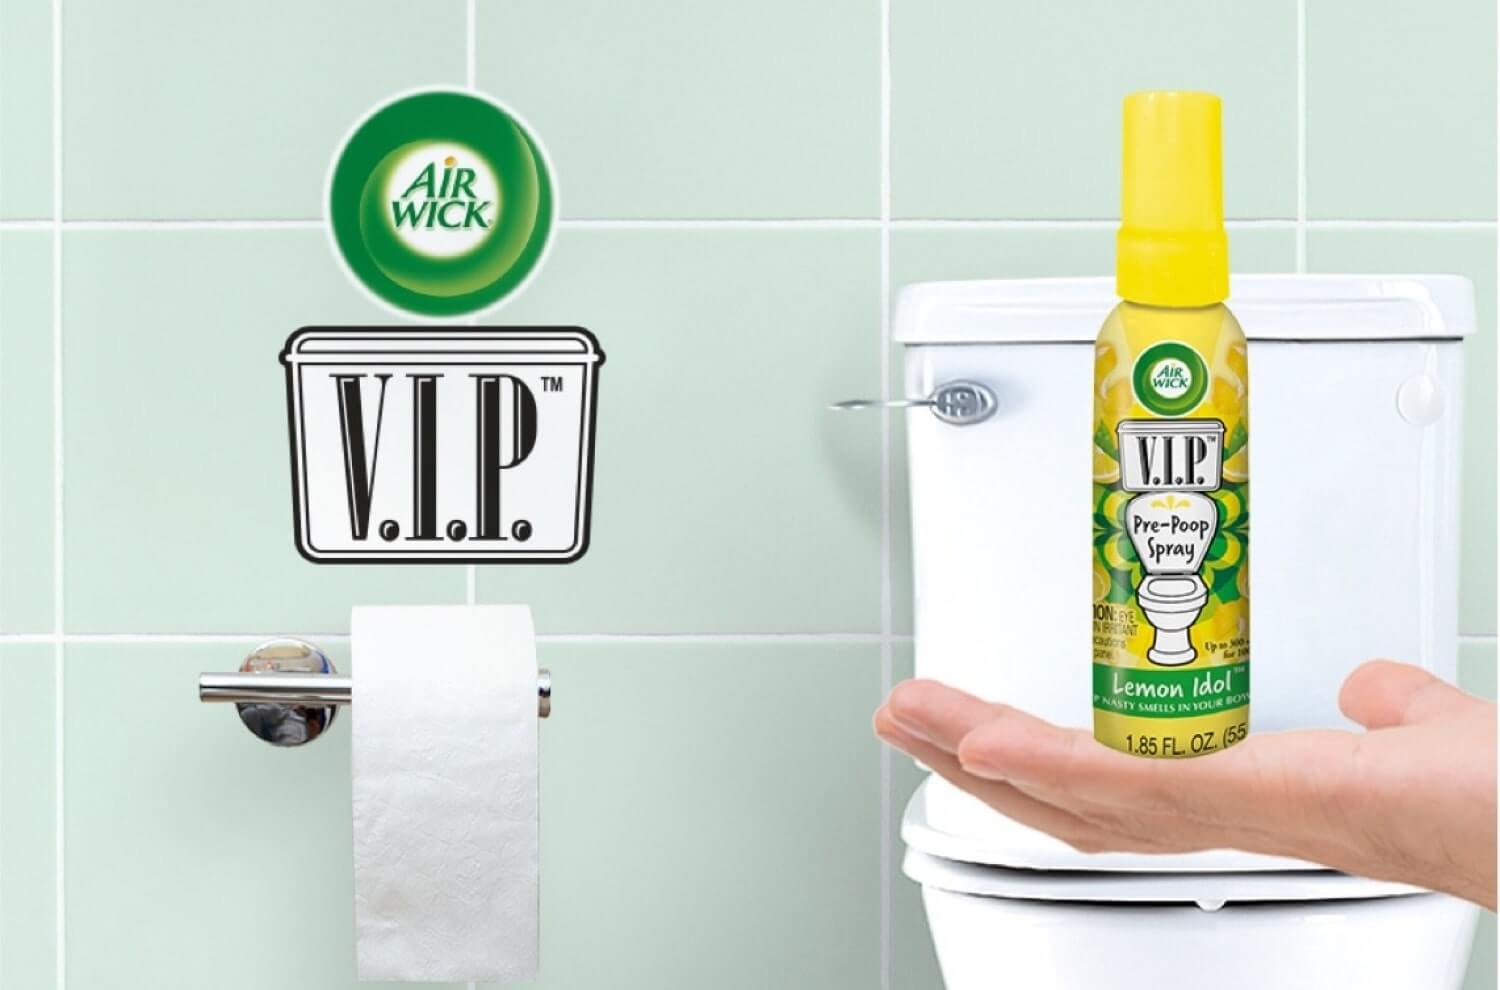 Air Wick V.I.P. Pre-Poop Toilet Spray, Fruity Pin-Up